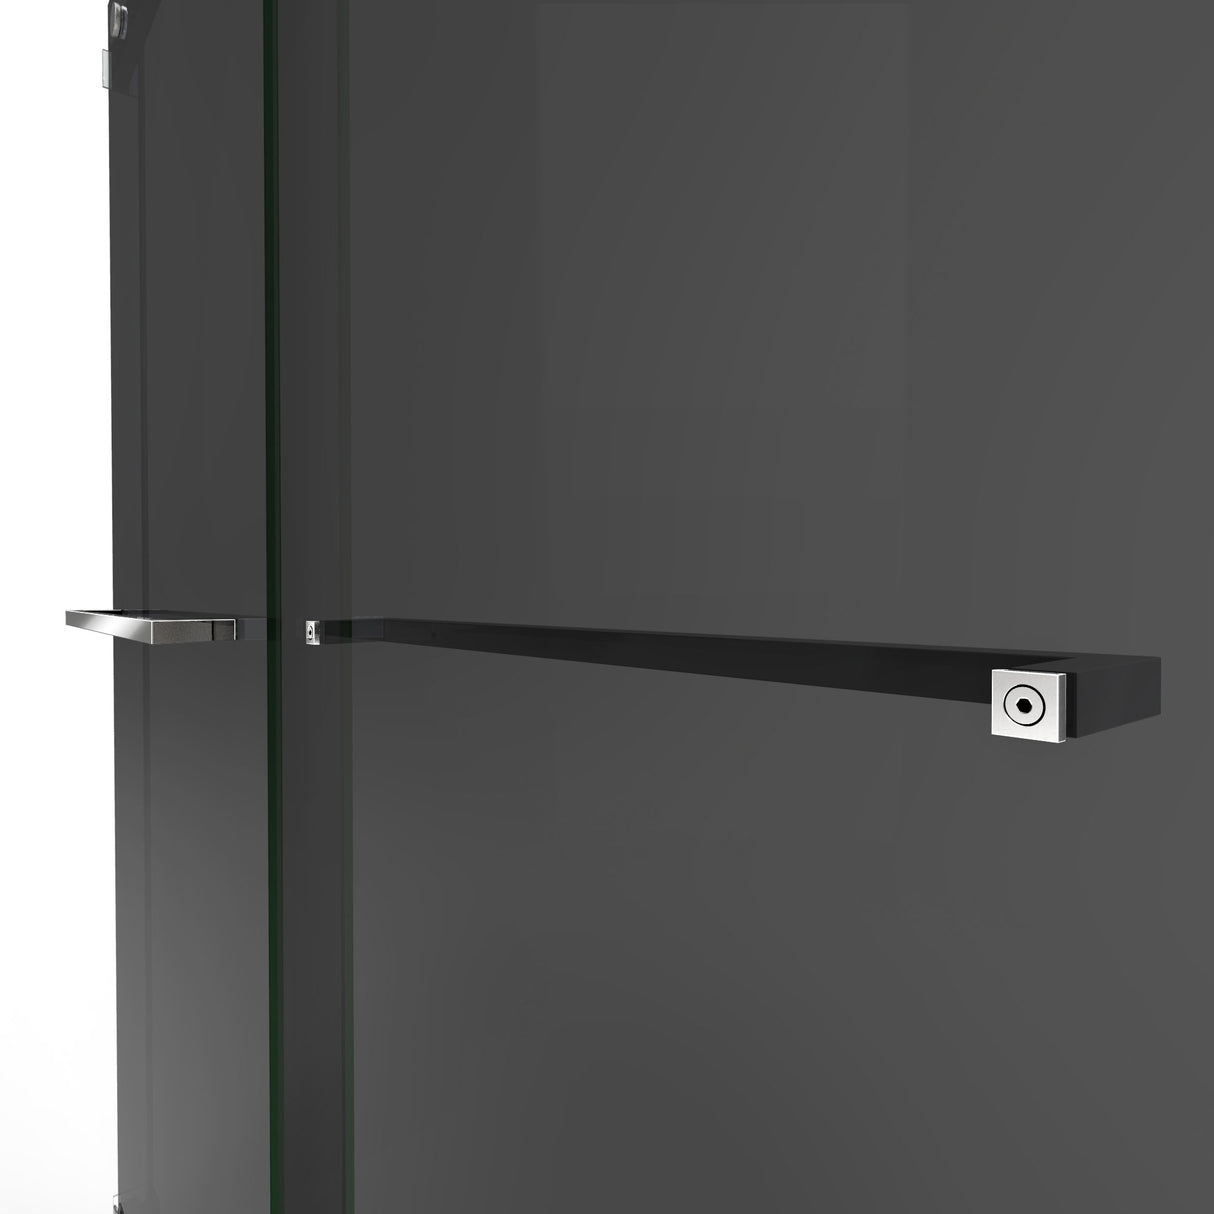 DreamLine Essence 56-60 in. W x 76 in. H Frameless Smoke Gray Glass Bypass Shower Door in Chrome